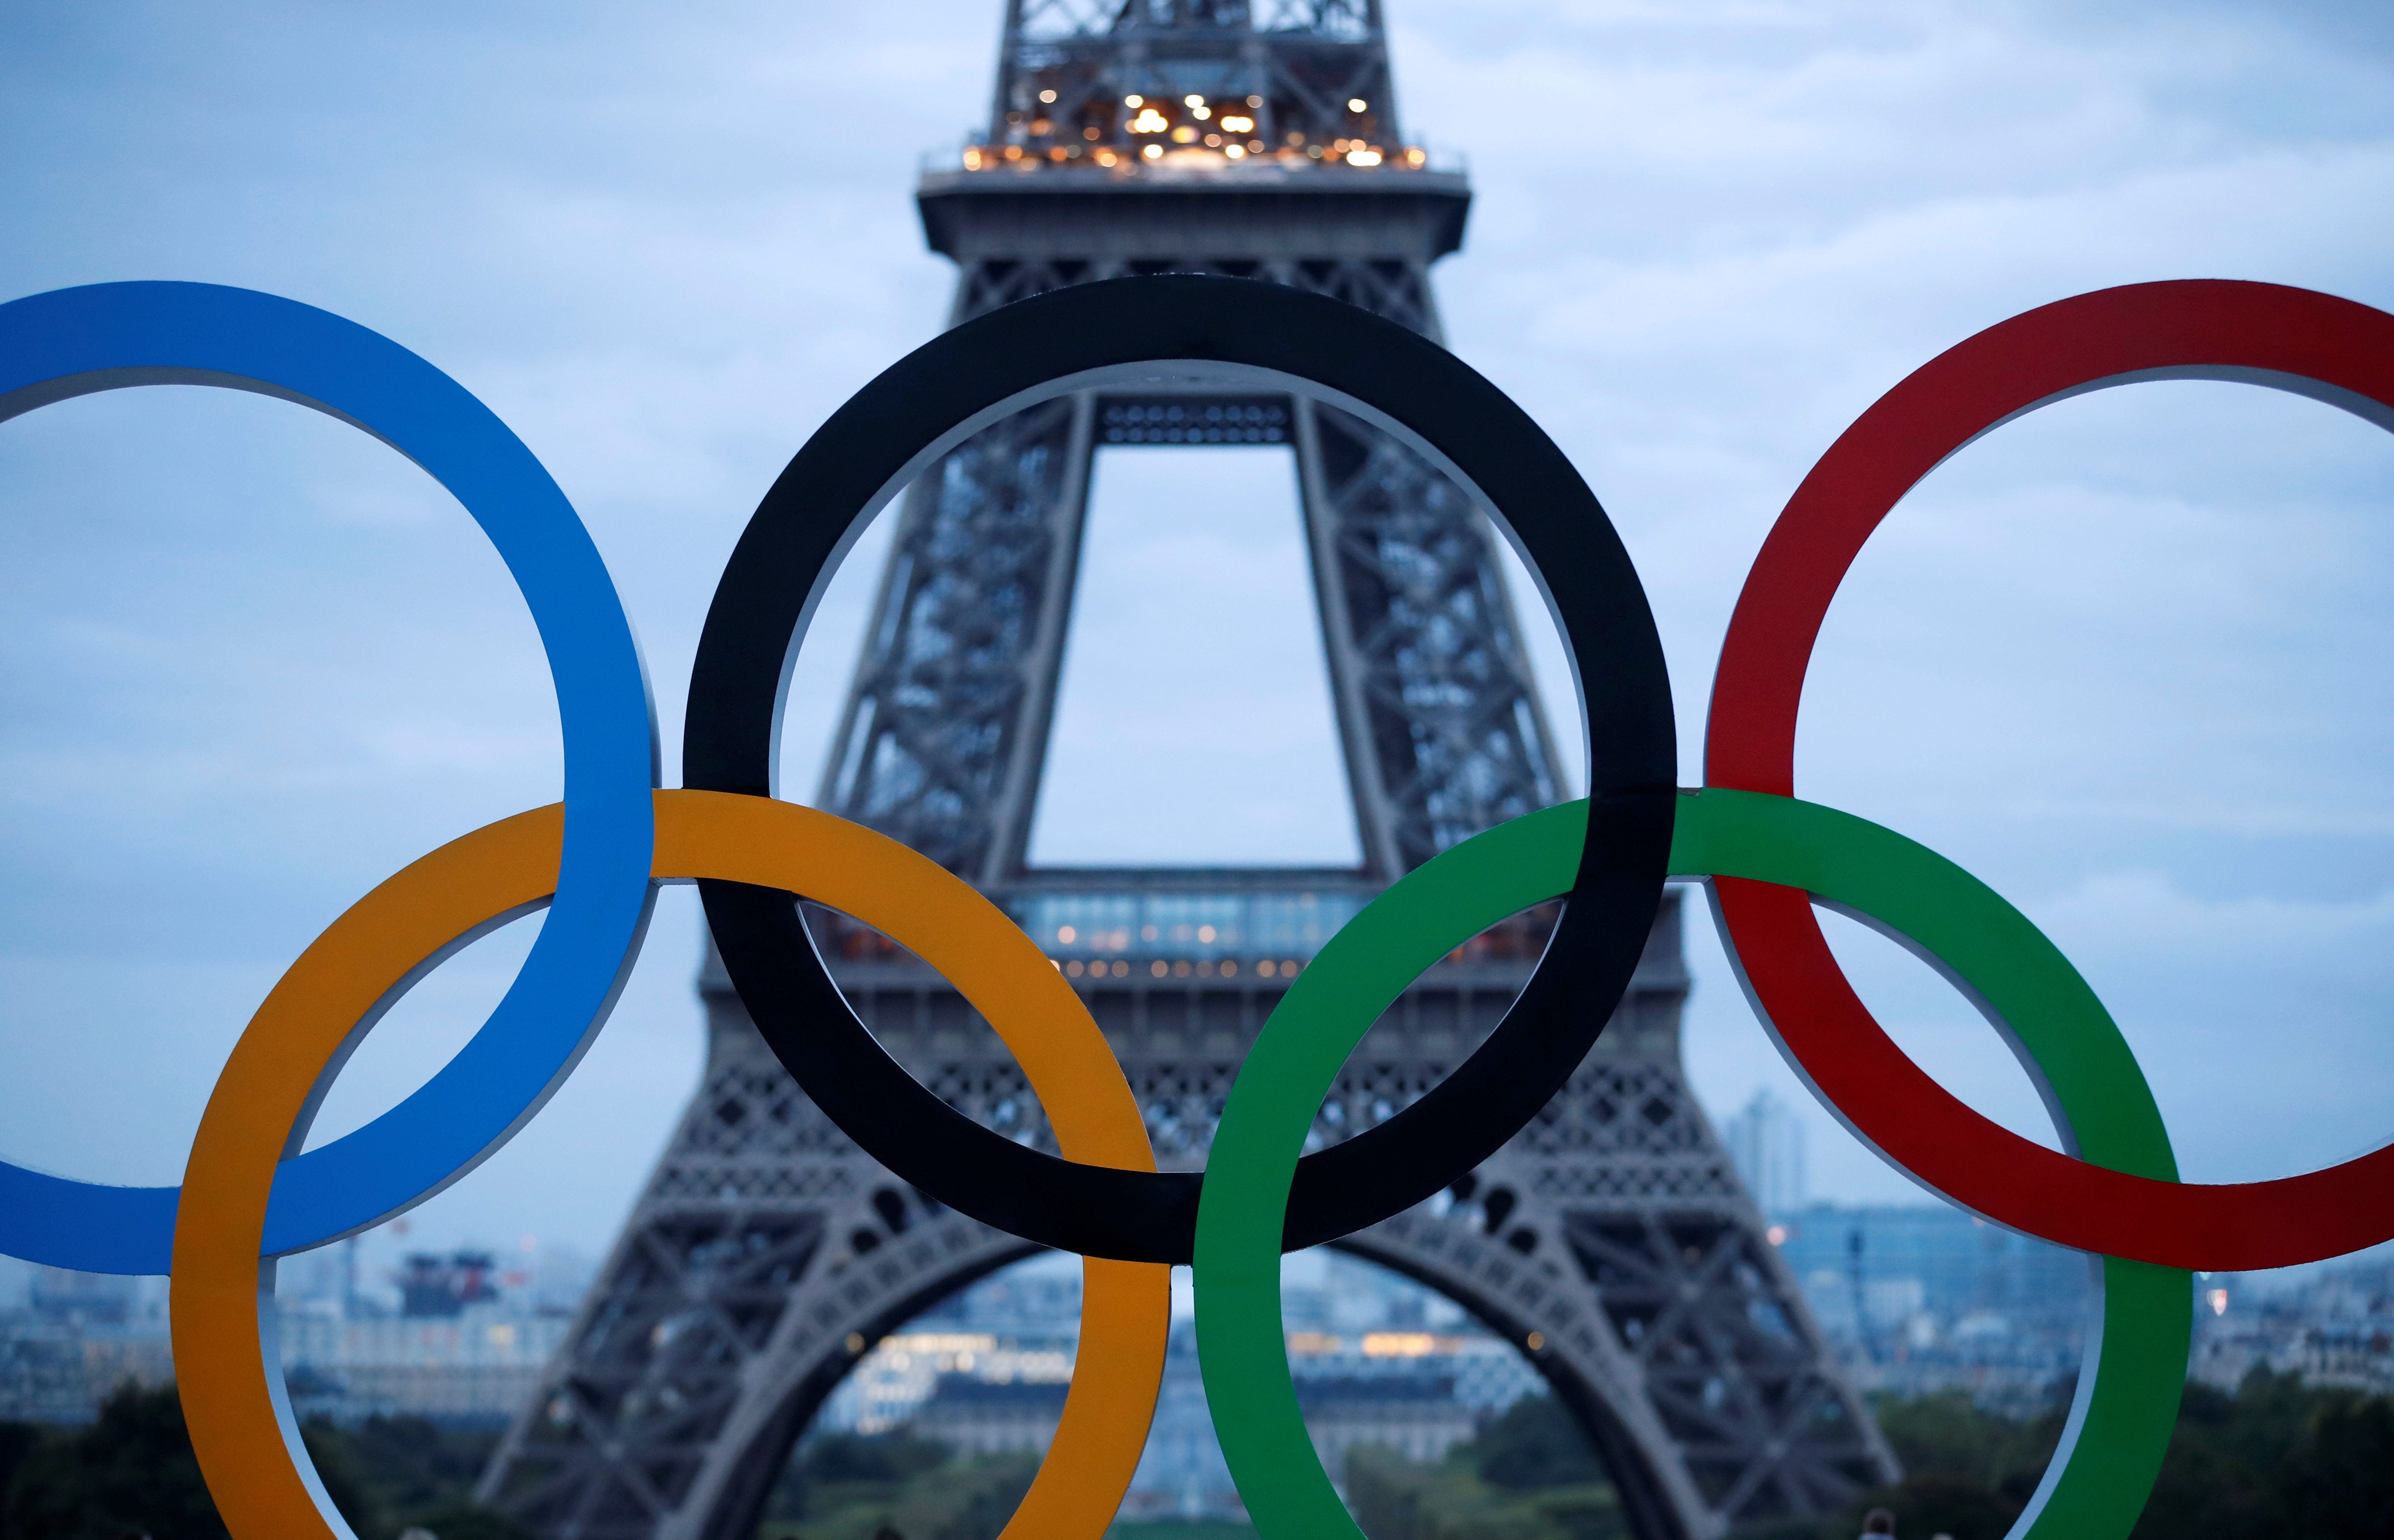 The Paris 2024 Olympics logo divides opinion